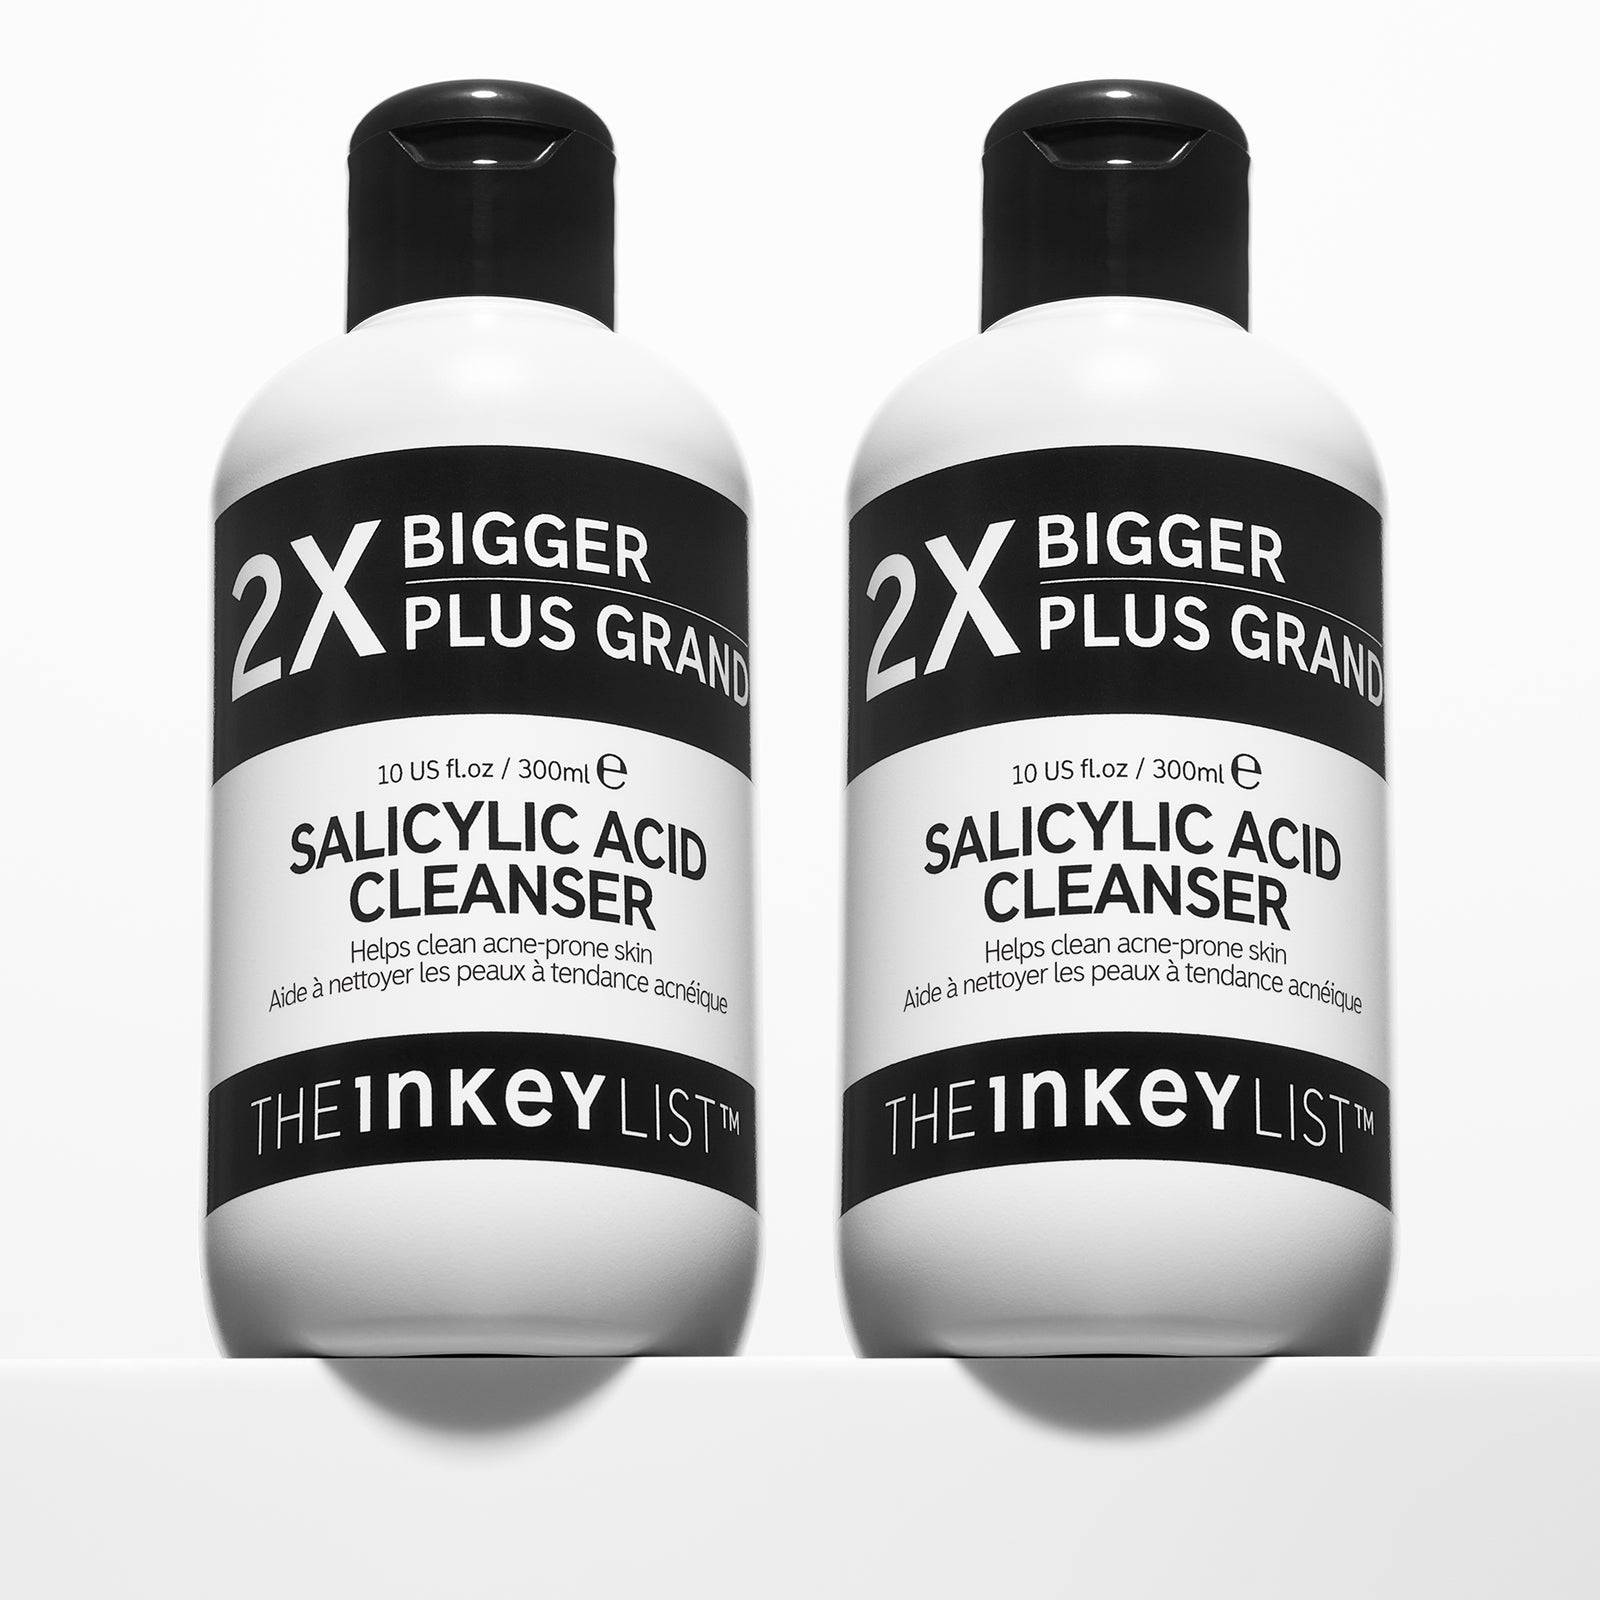 Supersize Salicylic Acid Cleanser Duo shelf shot with white background